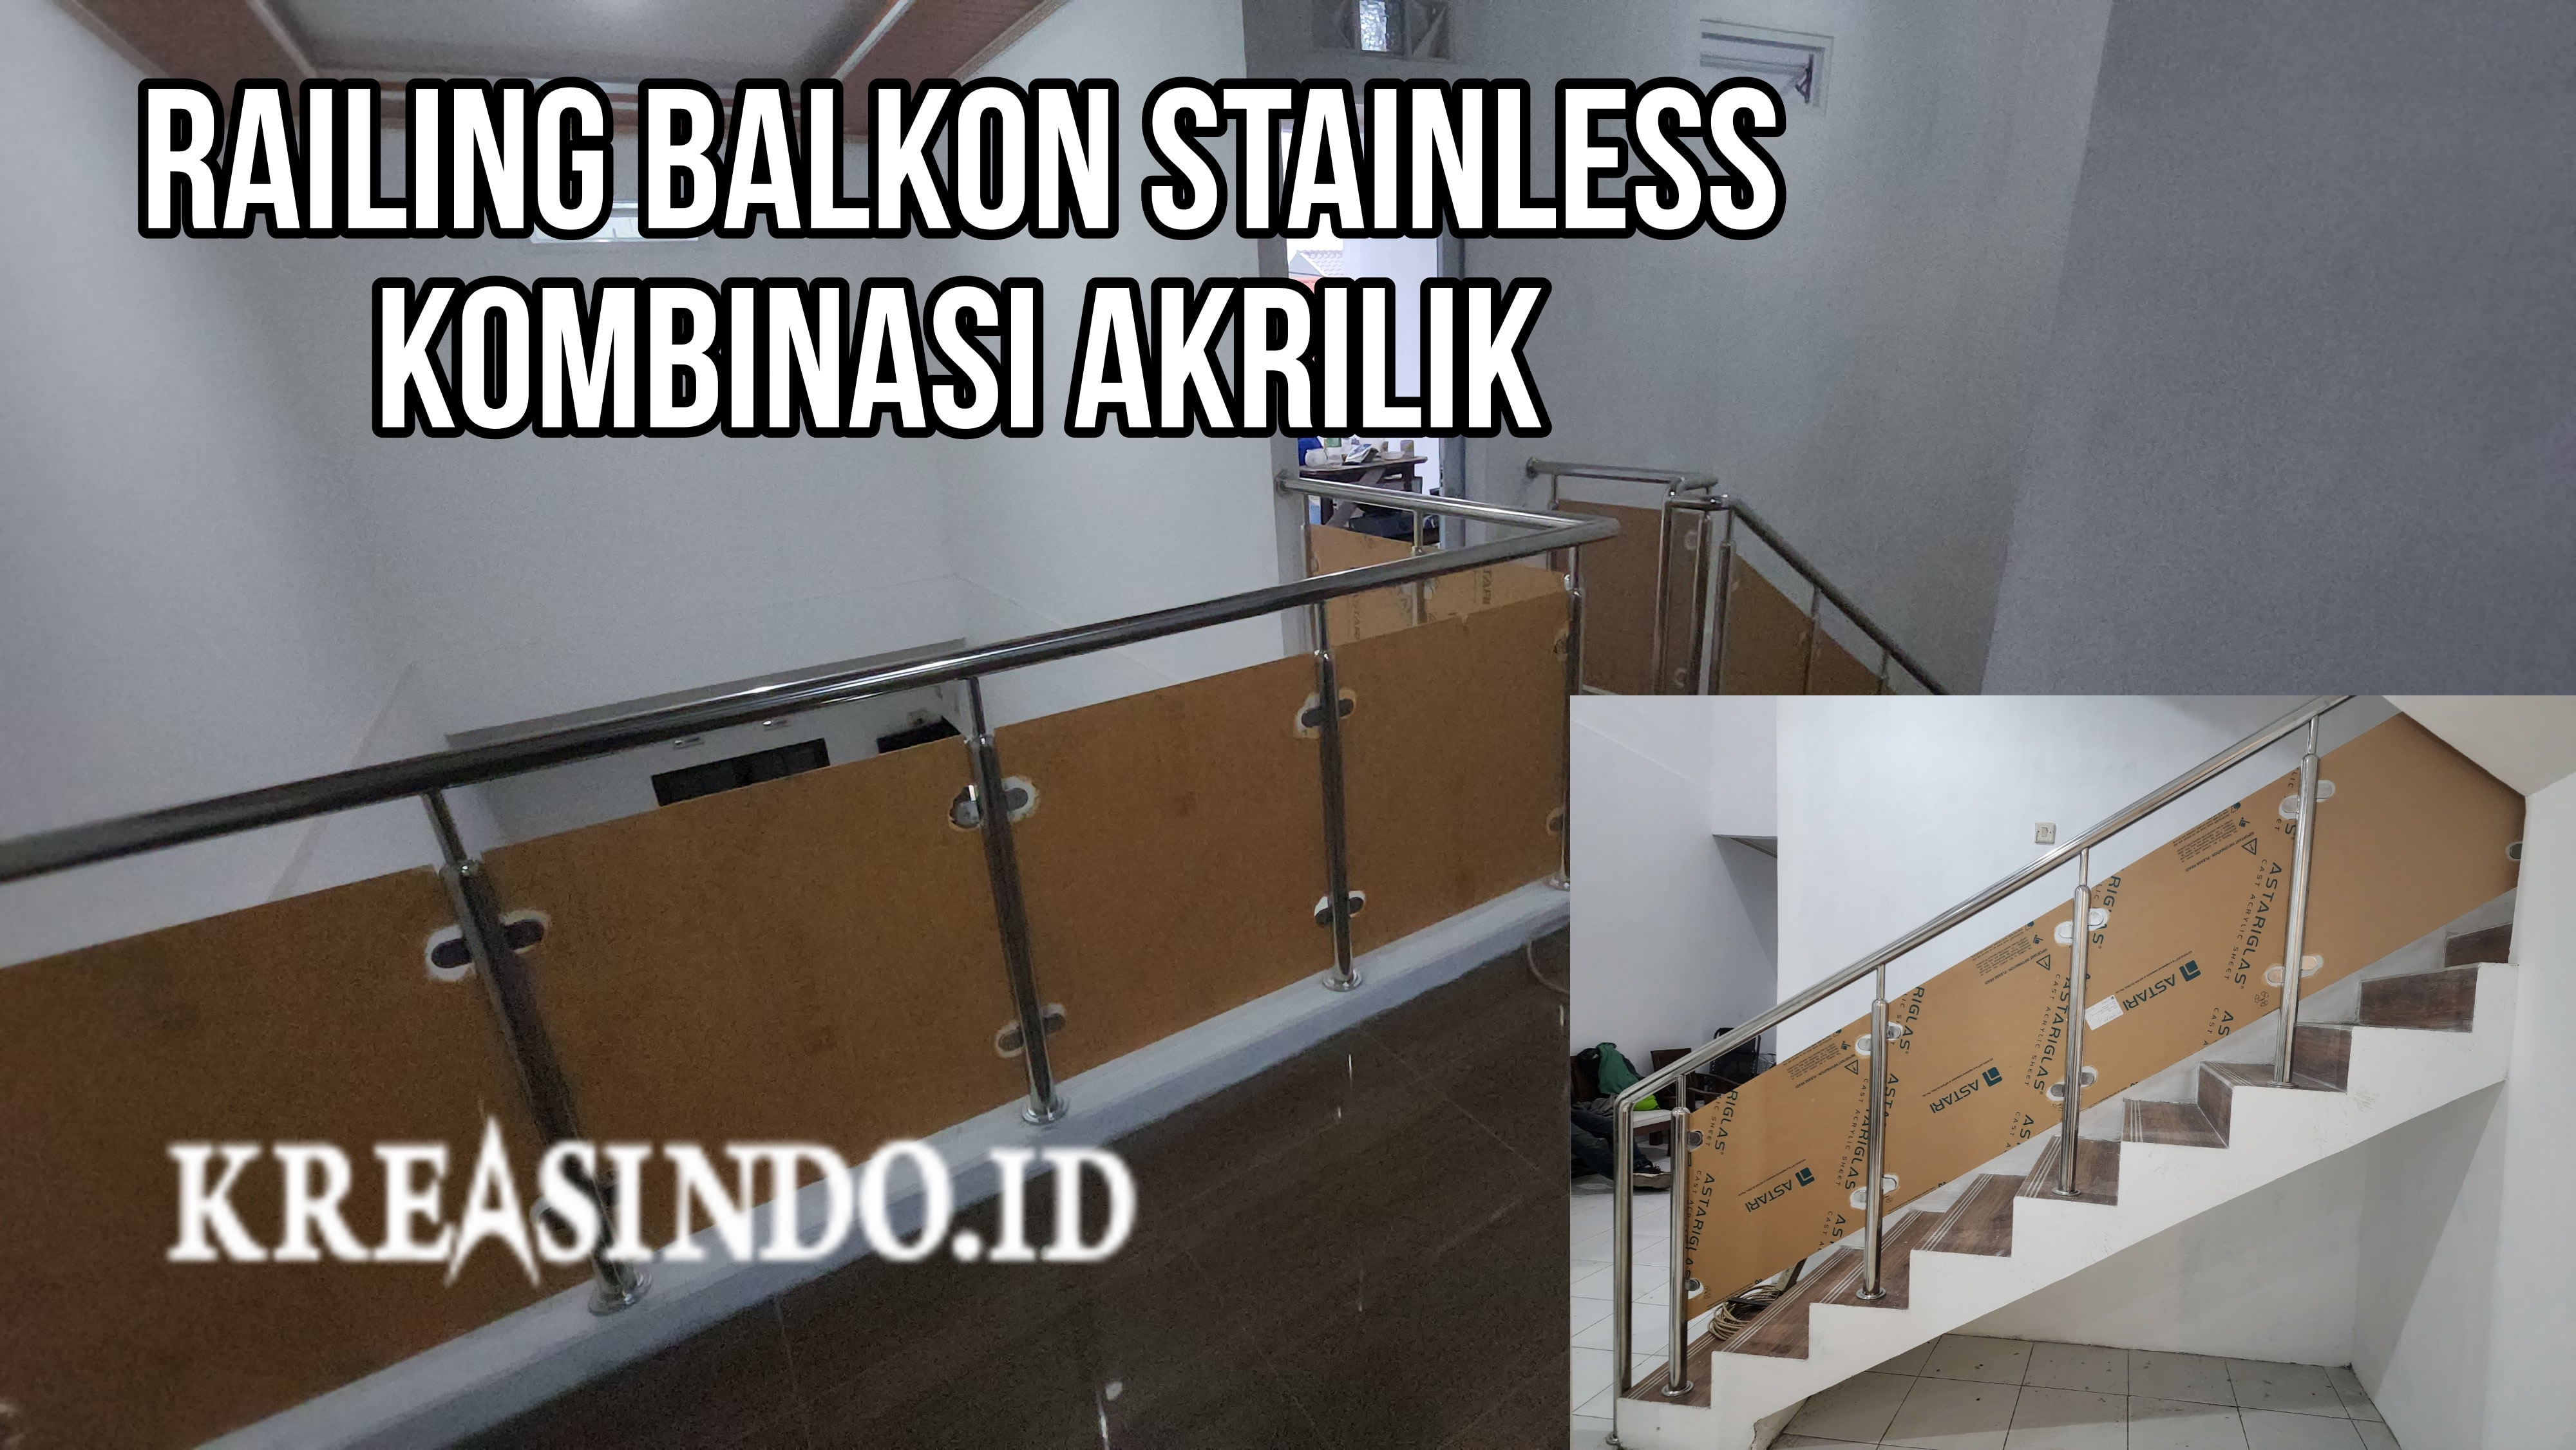 Railing Balkon Stainless Kombinasi Akrilik terpasang di Rumah Bpk Kustoro Puri Bojong Lestari Bojong Gede